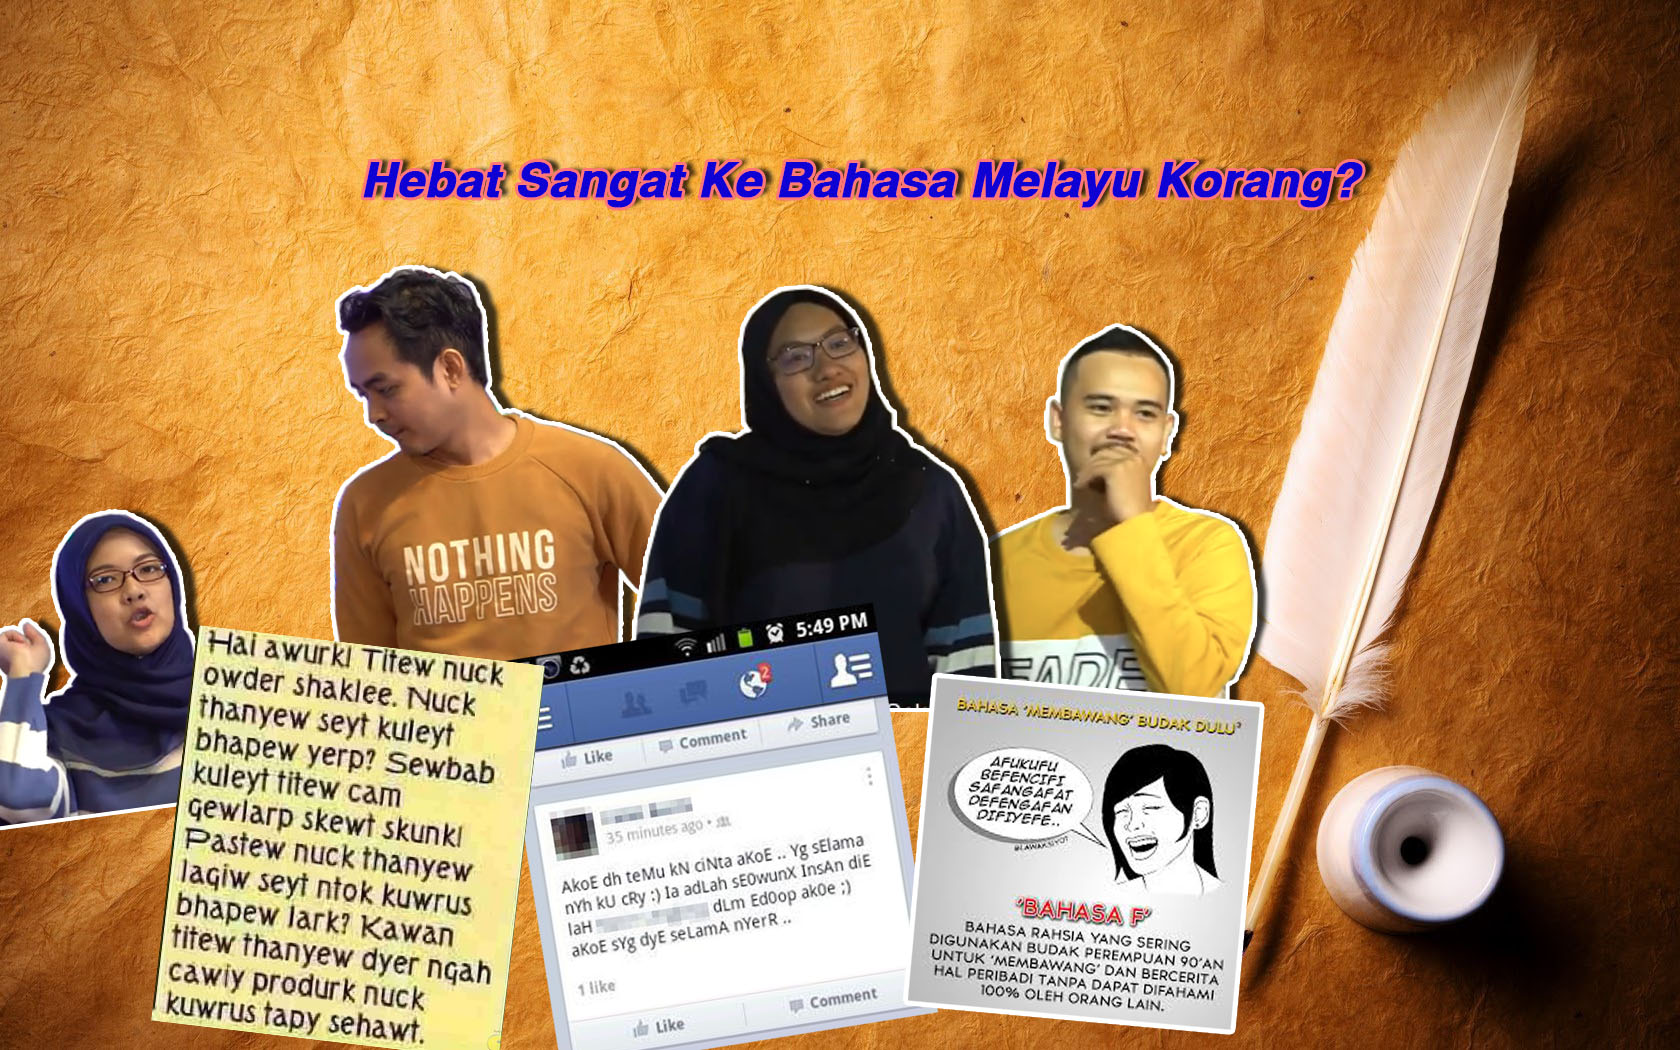 [VIDEO] Hebat Sangat Ke Bahasa Melayu Korang? Sohor Kini, Meridap? Apa Tuu?!